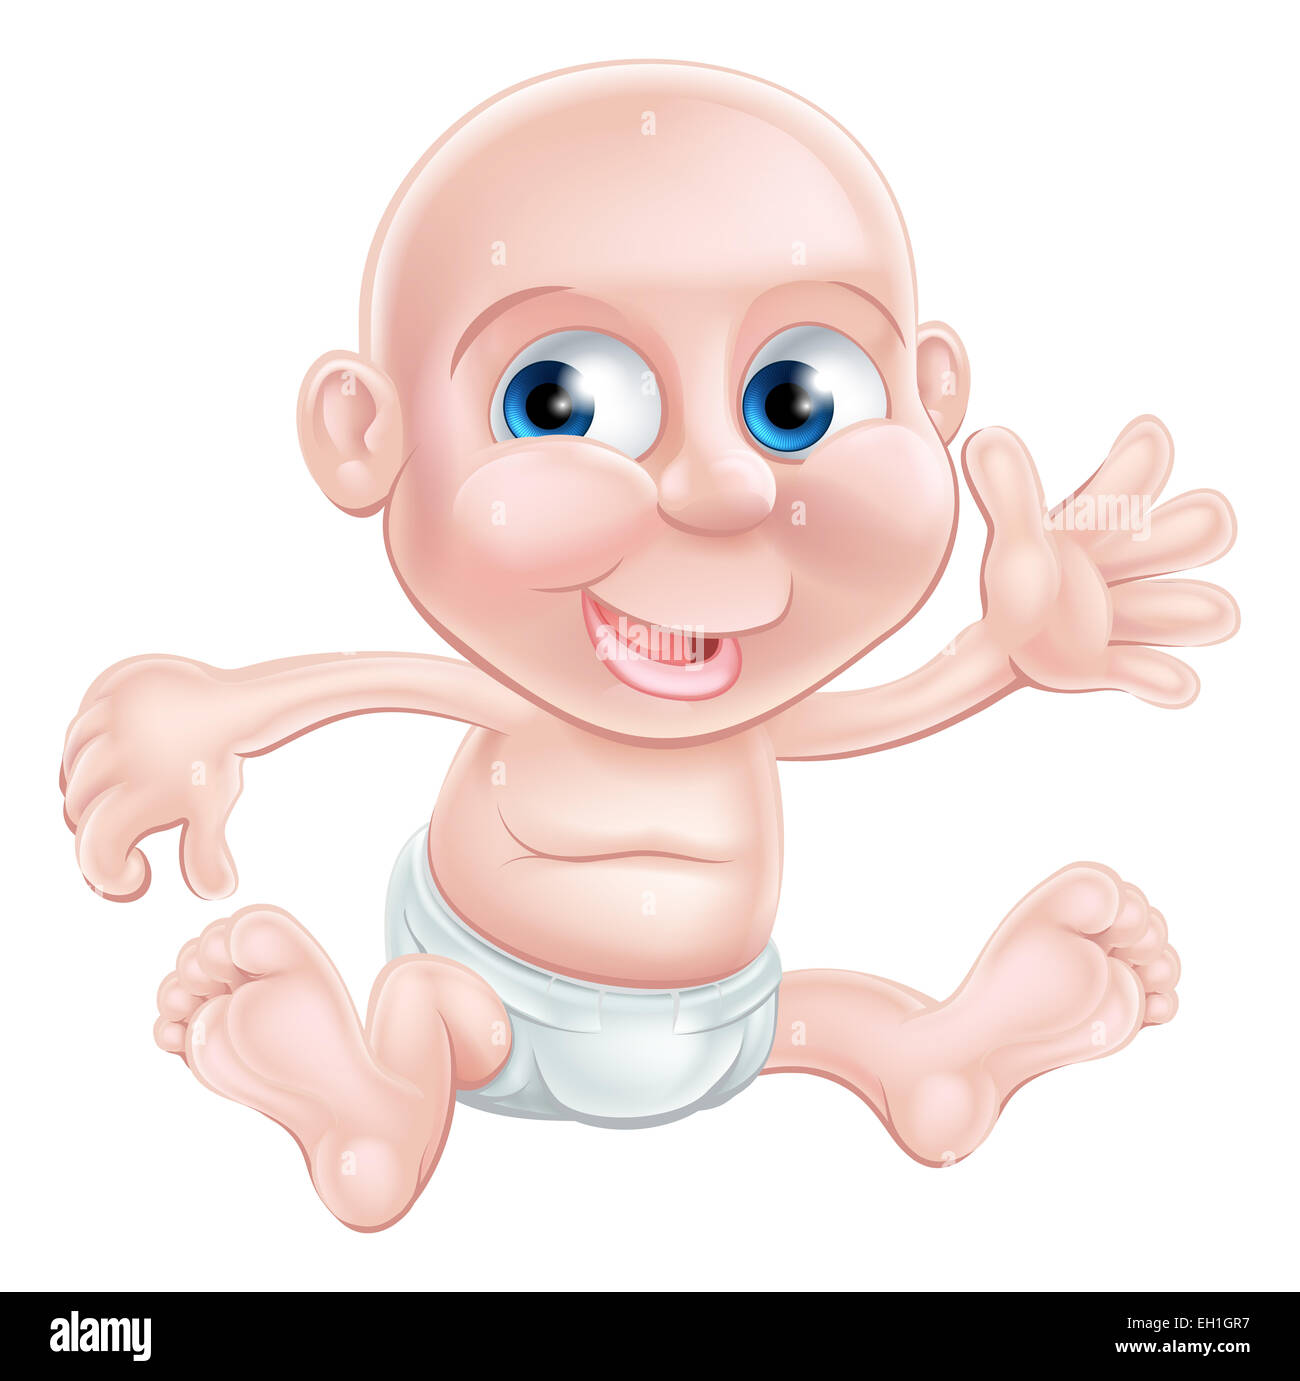 An illustration of a cute happy cartoon baby waving Stock Photo